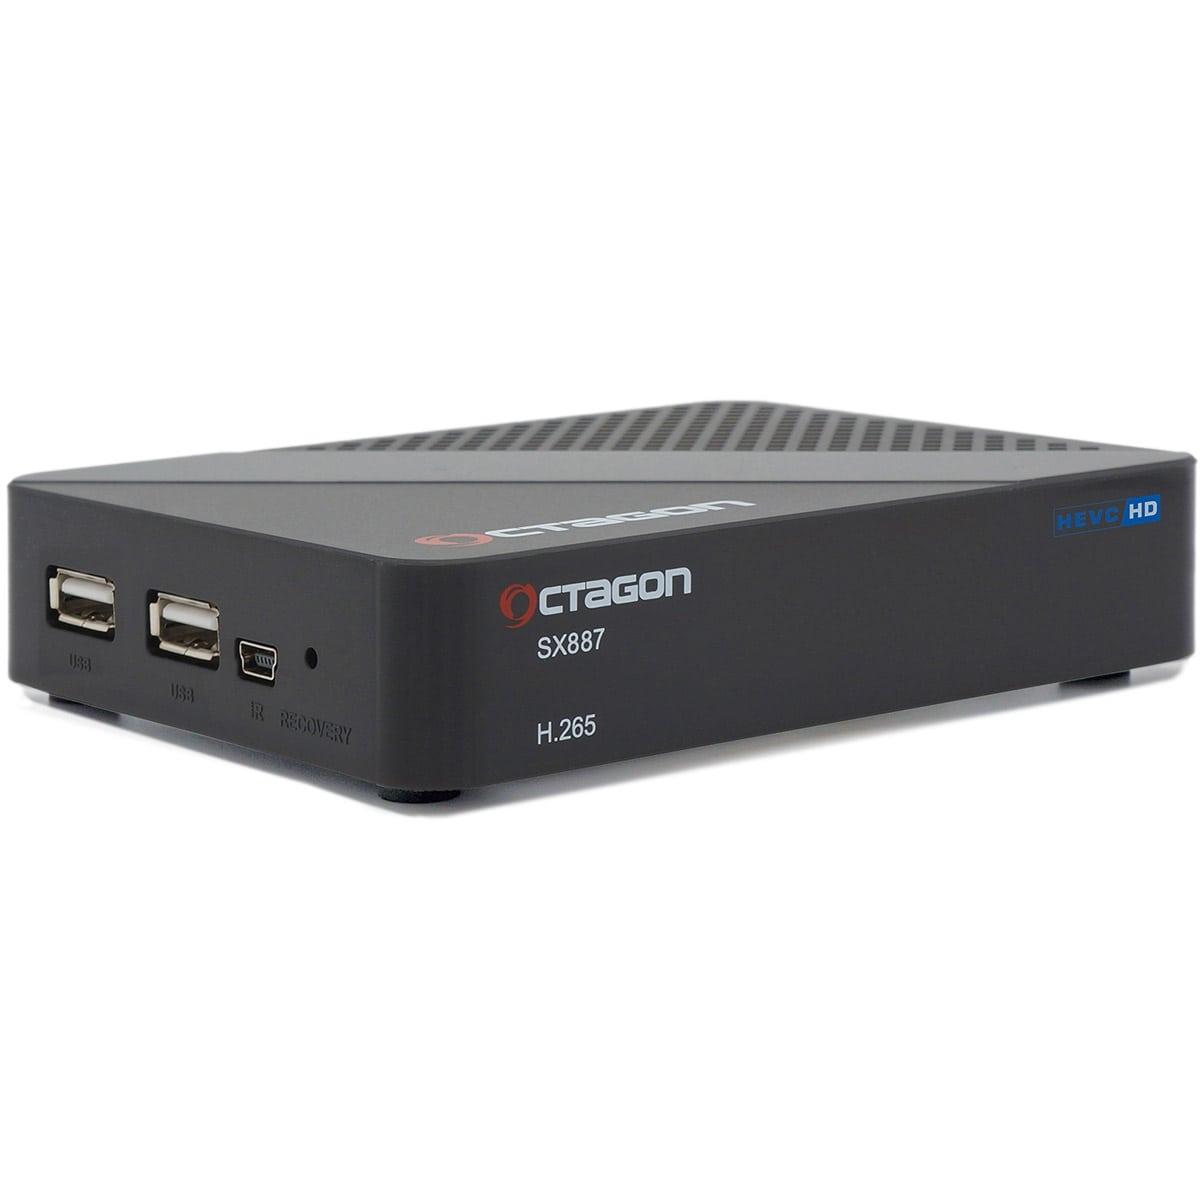 OCTAGON Octagon SX887 Full LAN Mediaplayer HD 1080p (Schwarz) H.265 Linux IP-Receiver